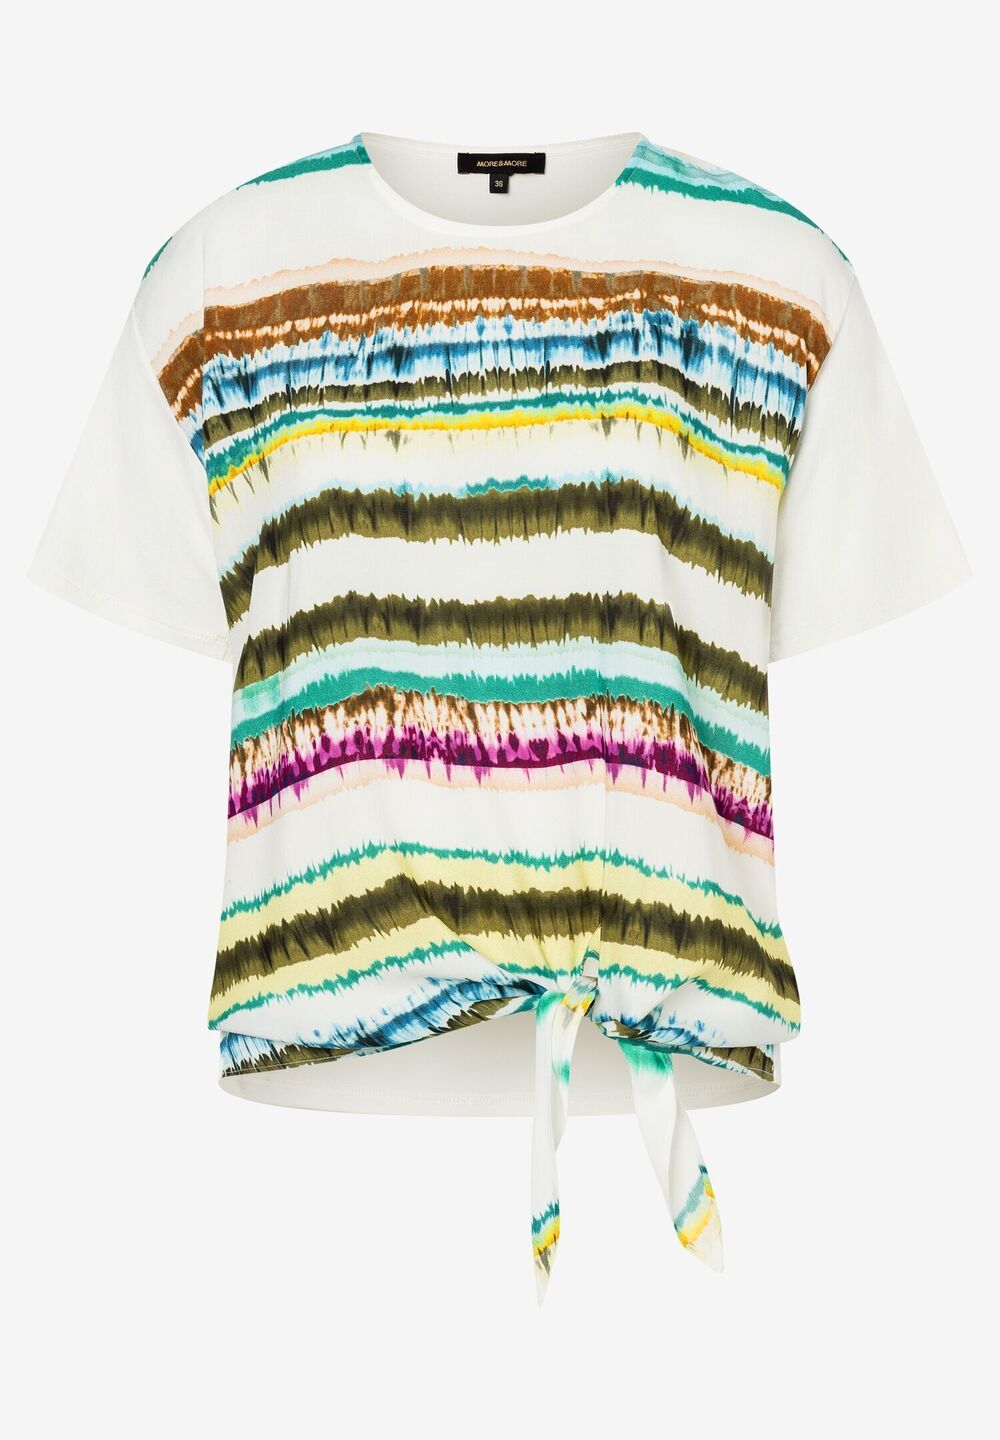 T-Shirt mit Batik-Print, Sommer-Kollektion, ecruDetailansicht 2